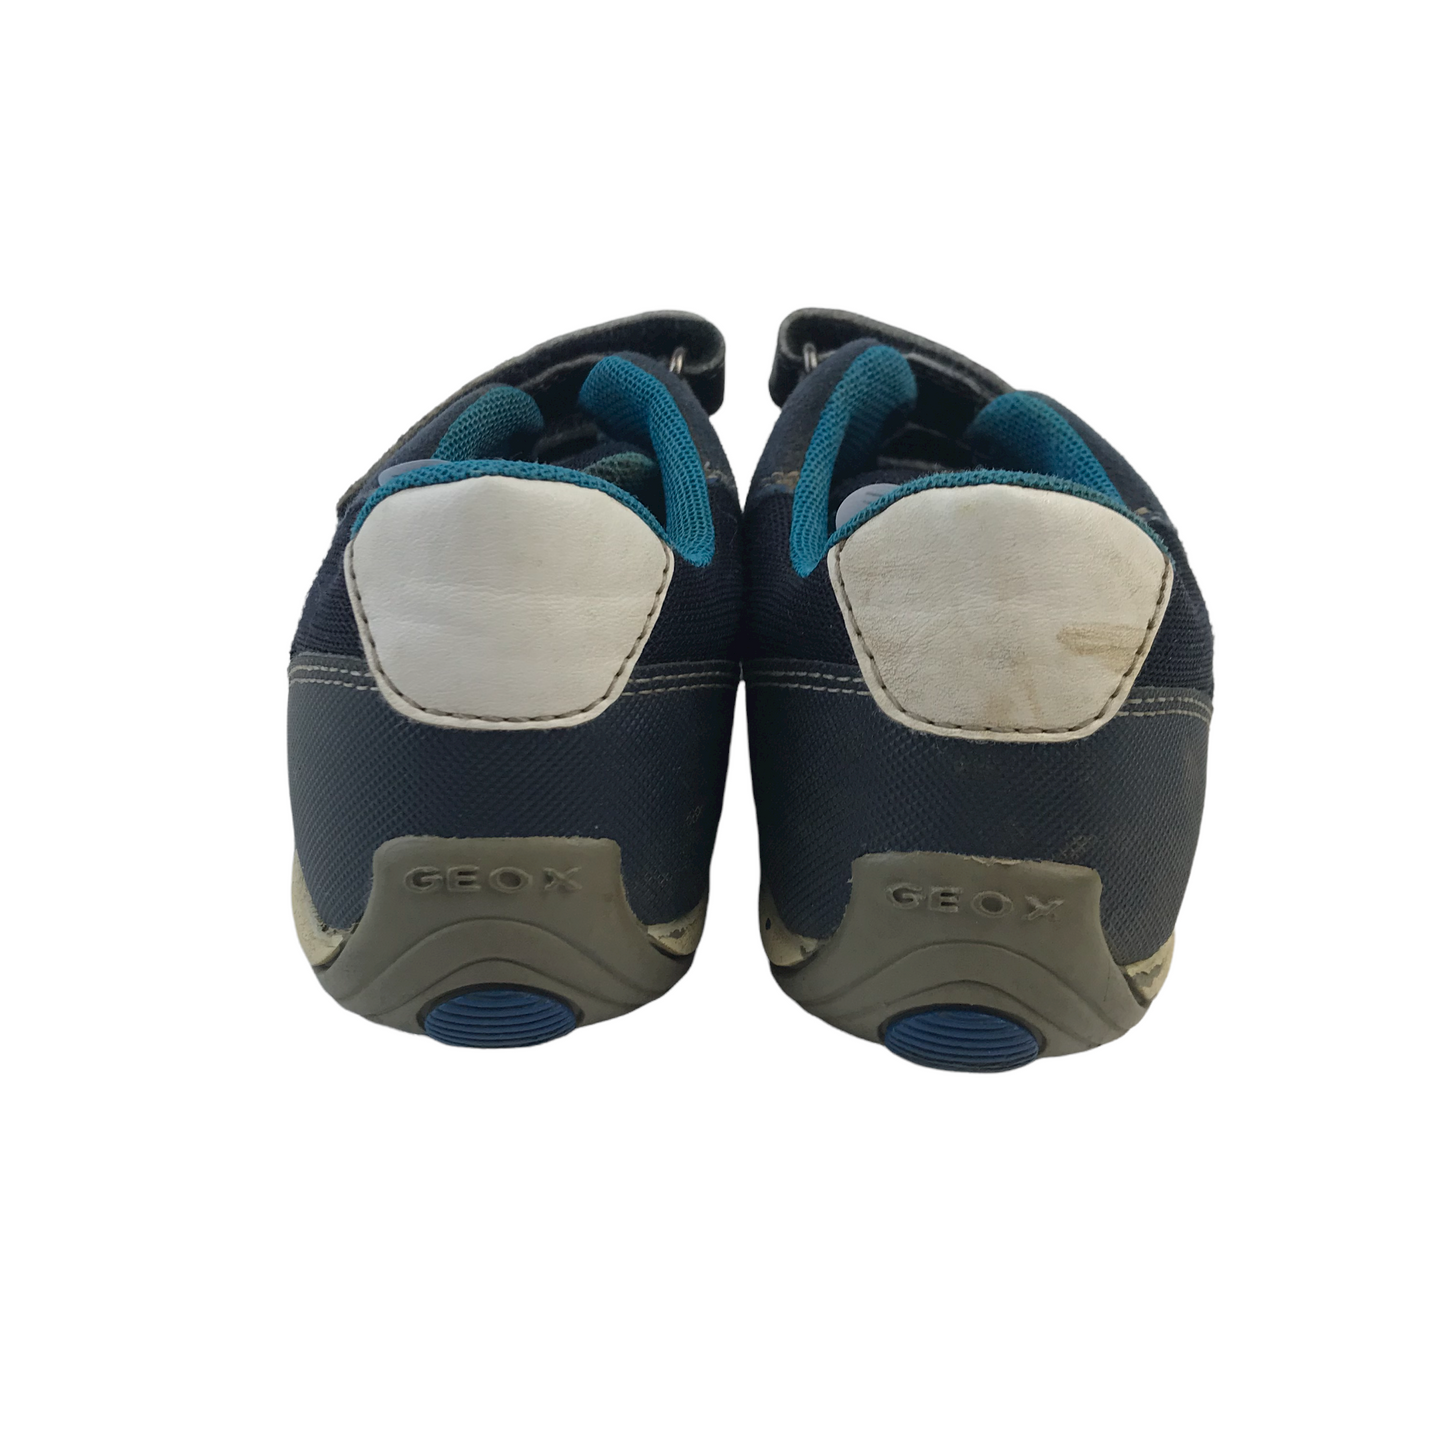 Geox Navy Blue Trainers Shoe Size 11.5 (jr)